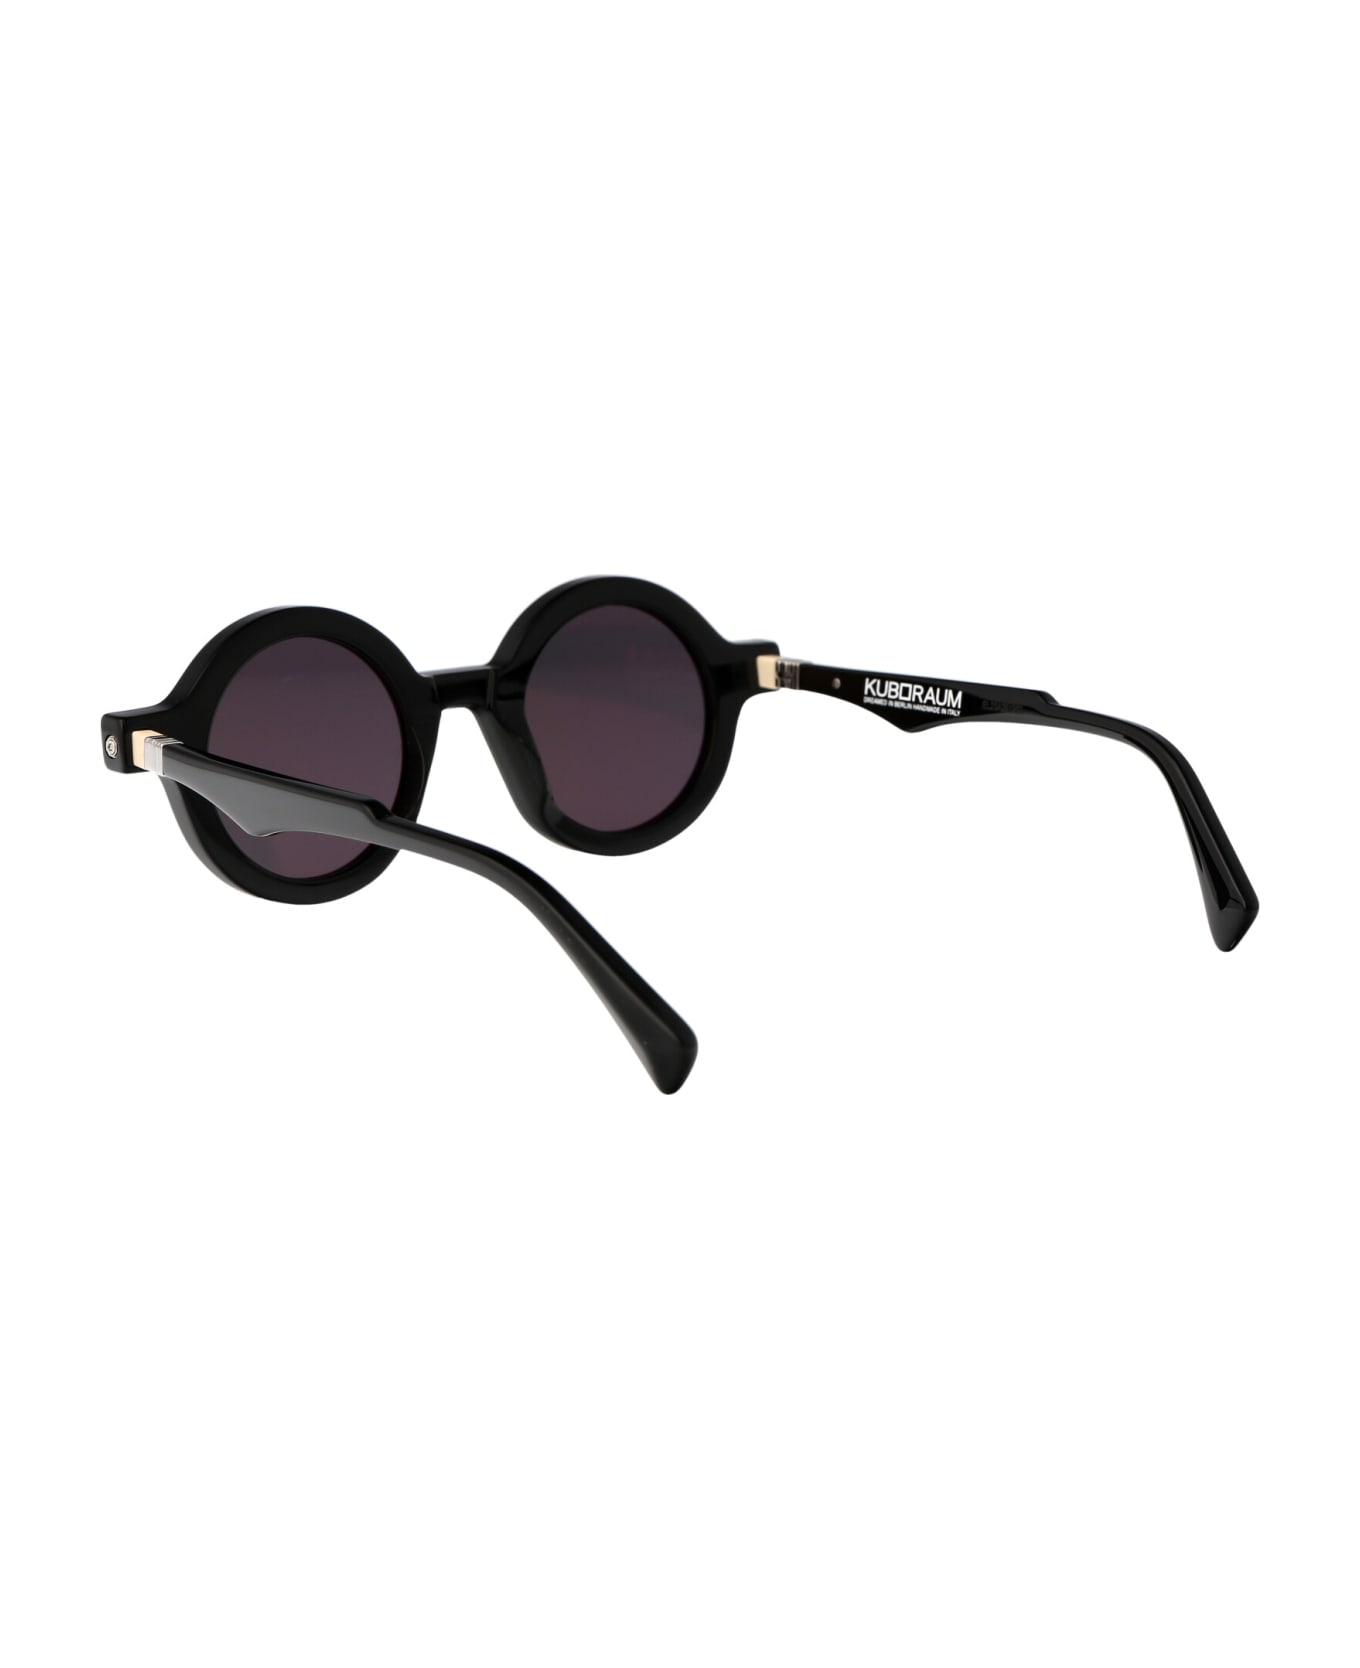 Kuboraum Maske Q7 Sunglasses - BS 2grey サングラス